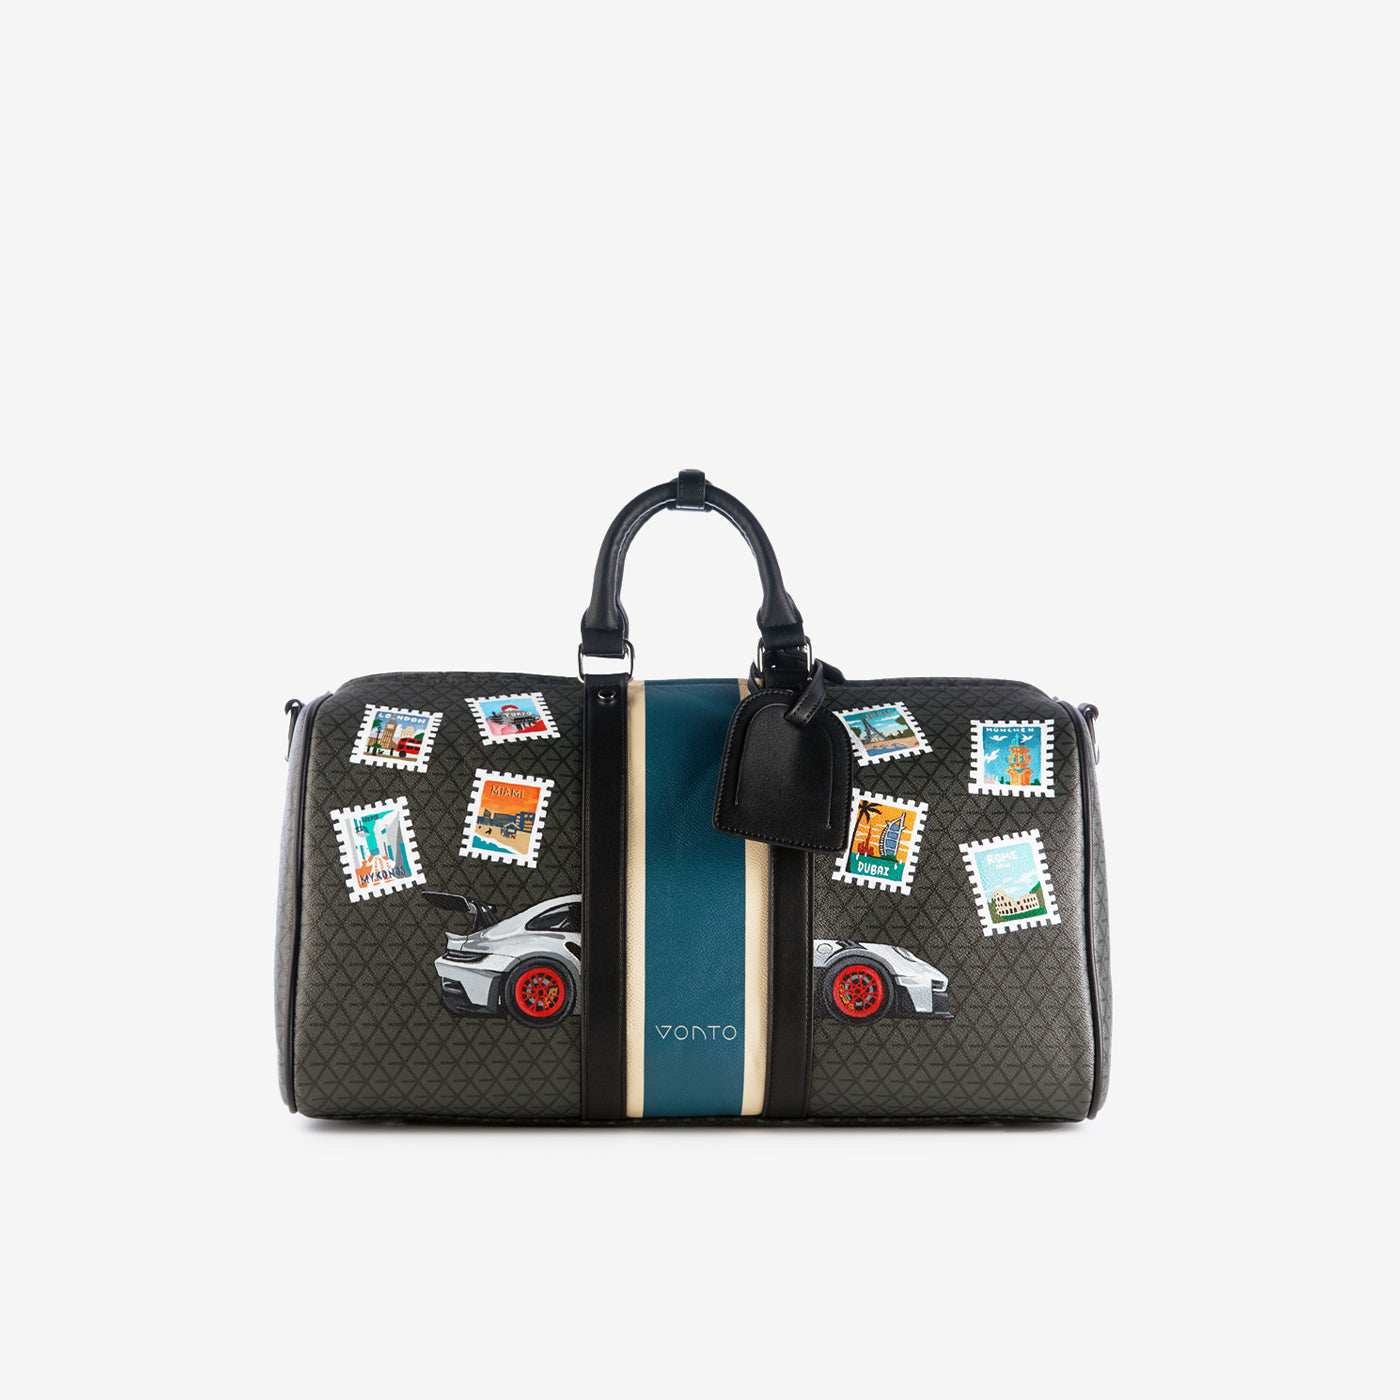 Customized Duffle Bag